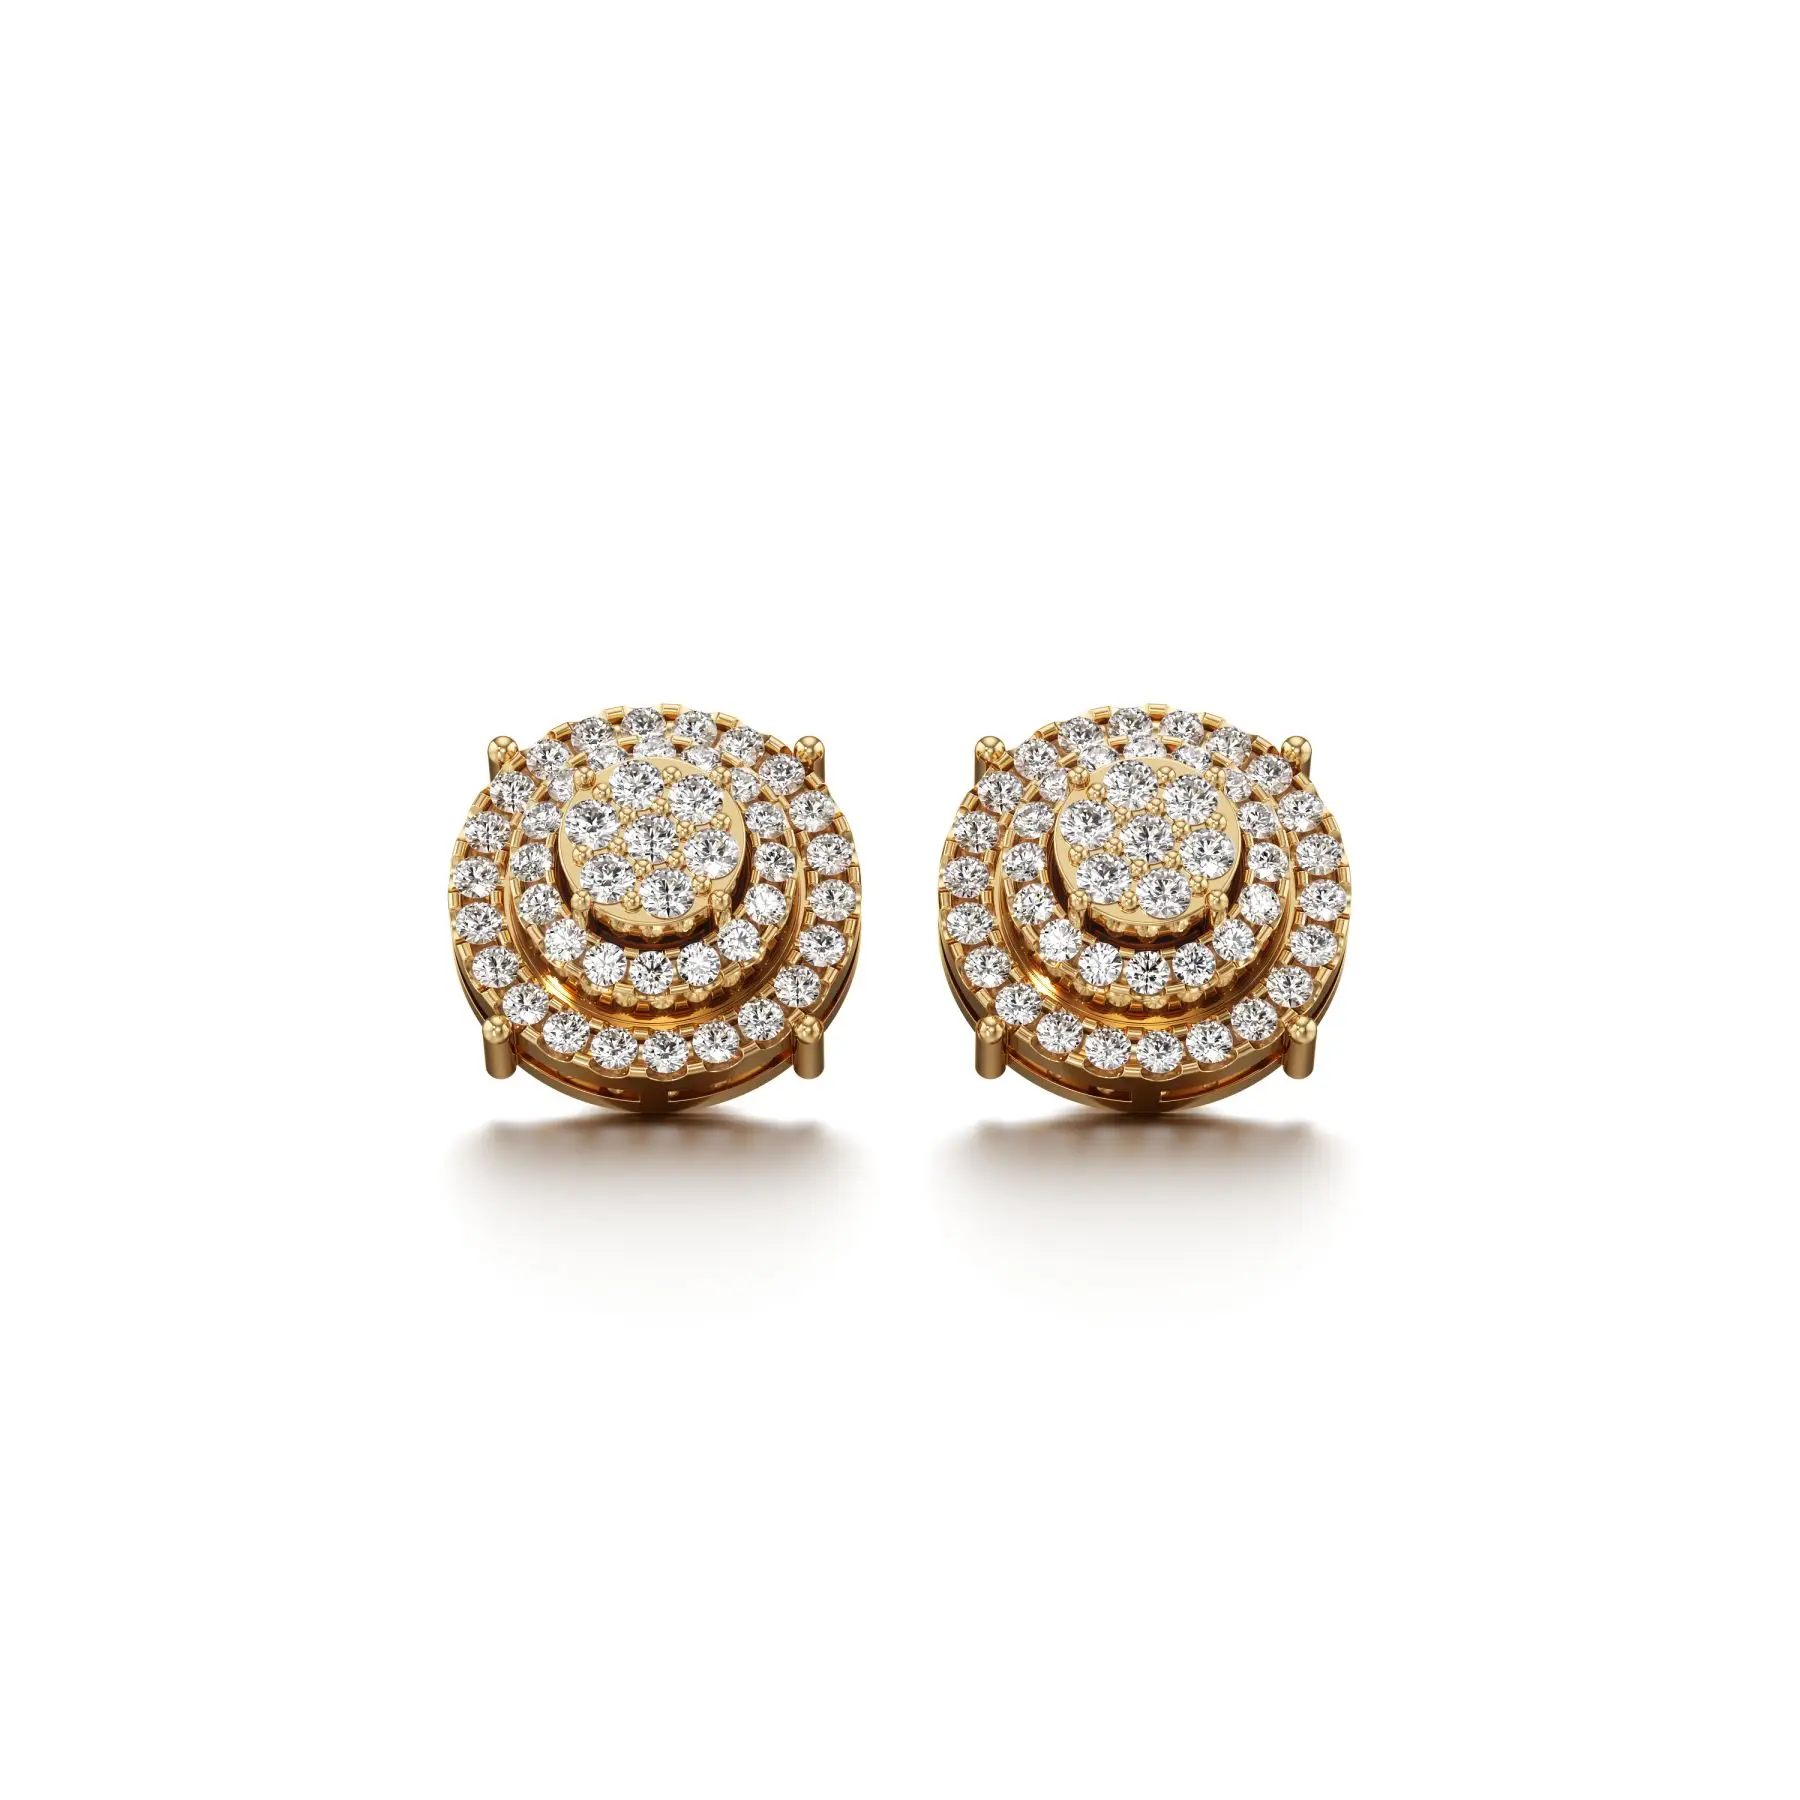 Frosty Layered Diamond Earrings in Yellow 10k Gold